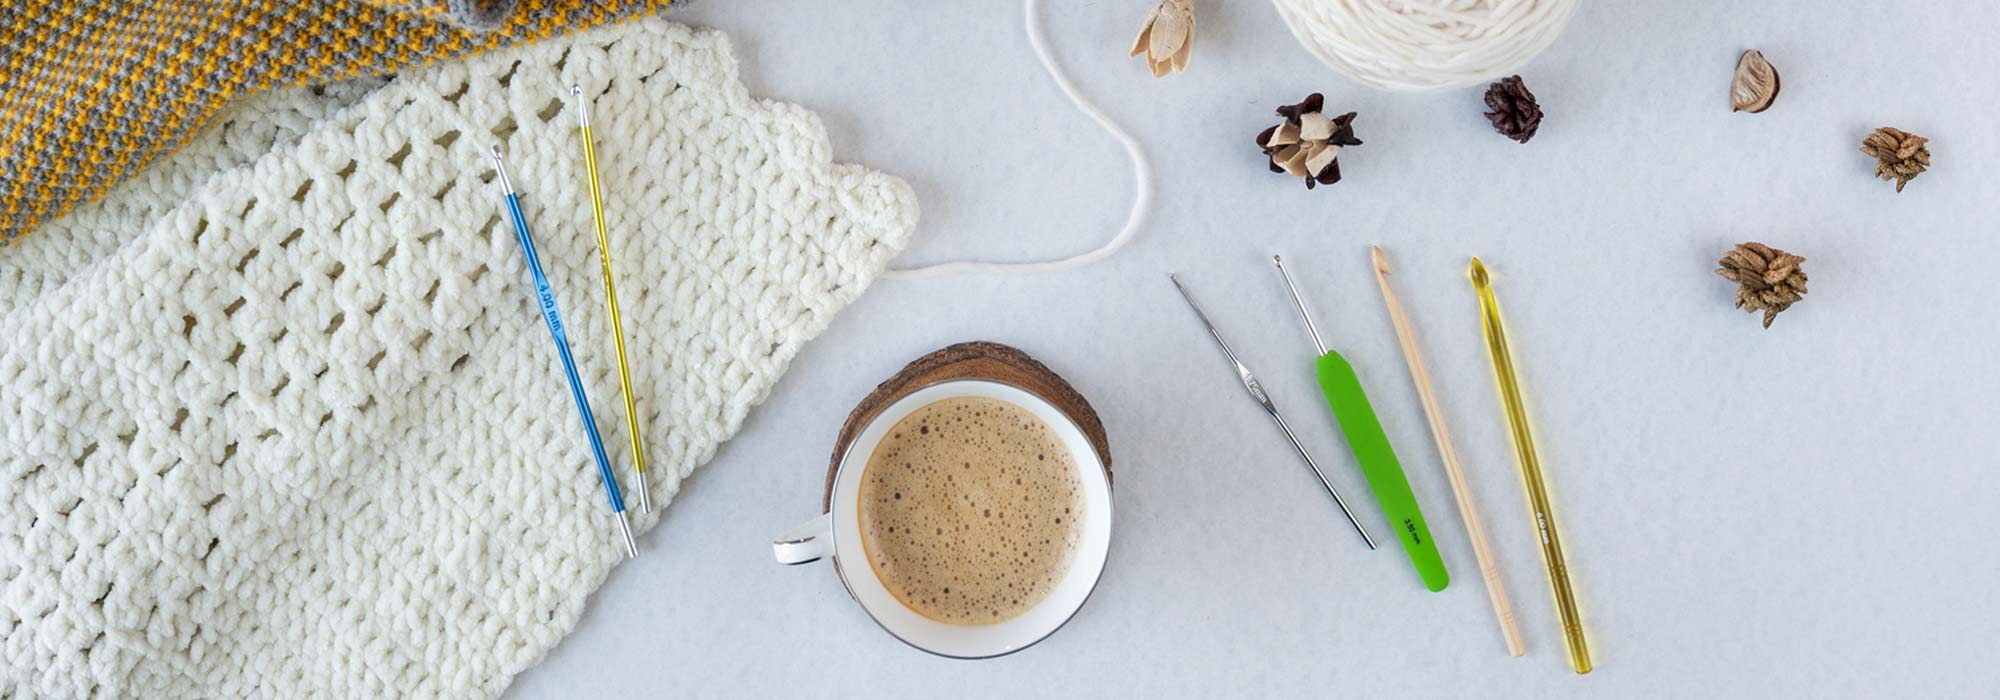 Best Crochet Hooks and Tools & Accessories | KnitPro